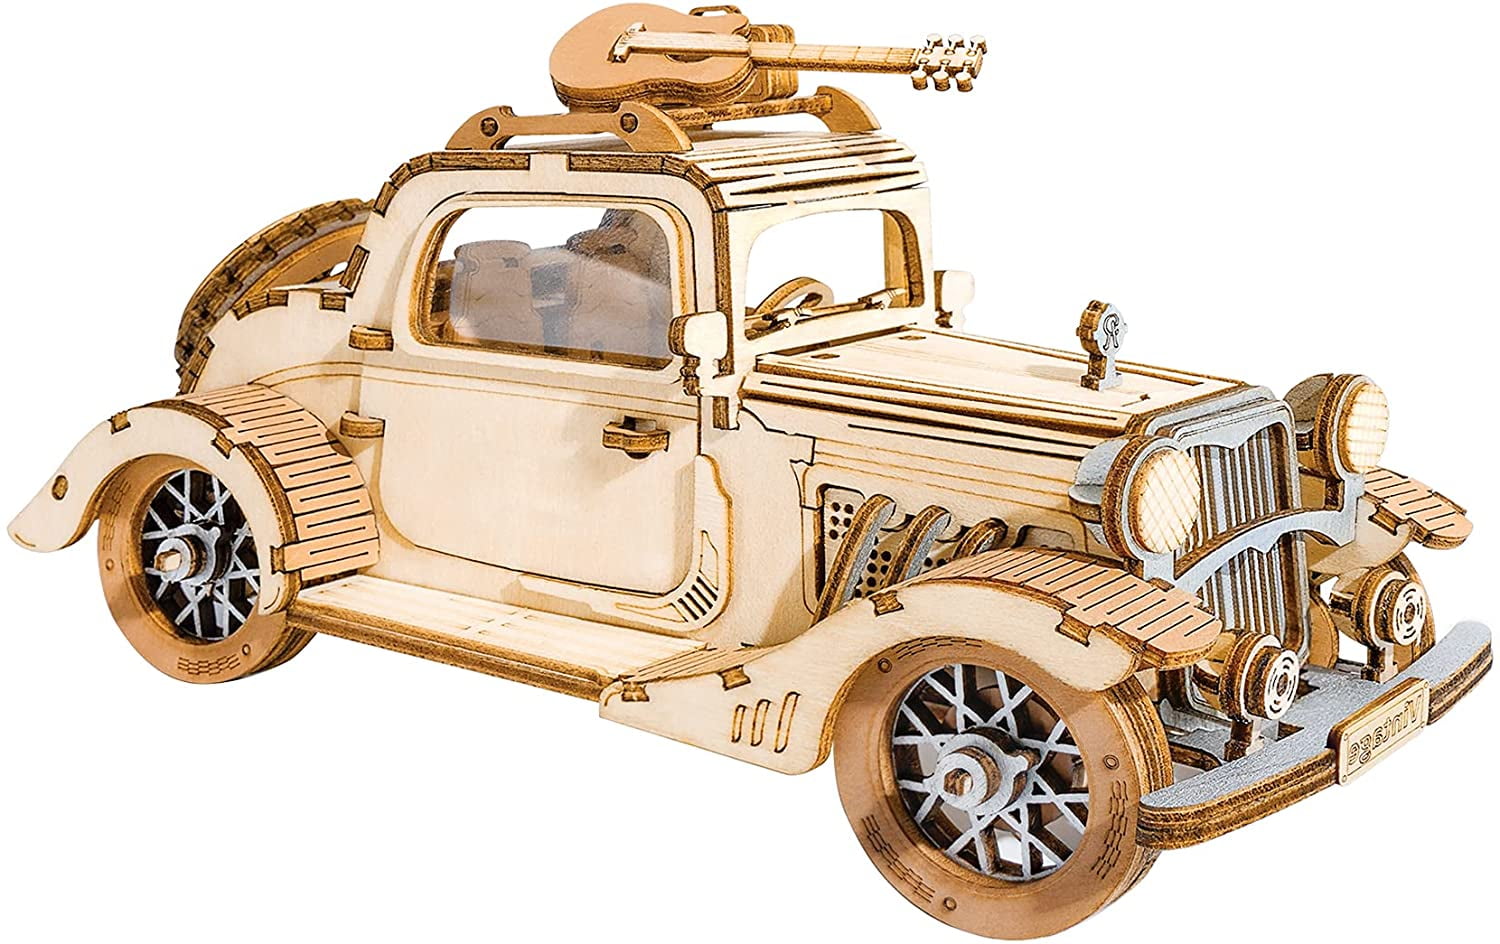 Robotime 3D Puzzle Toy DIY Wooden Crafts Kits Model Building Vintage Home Decor